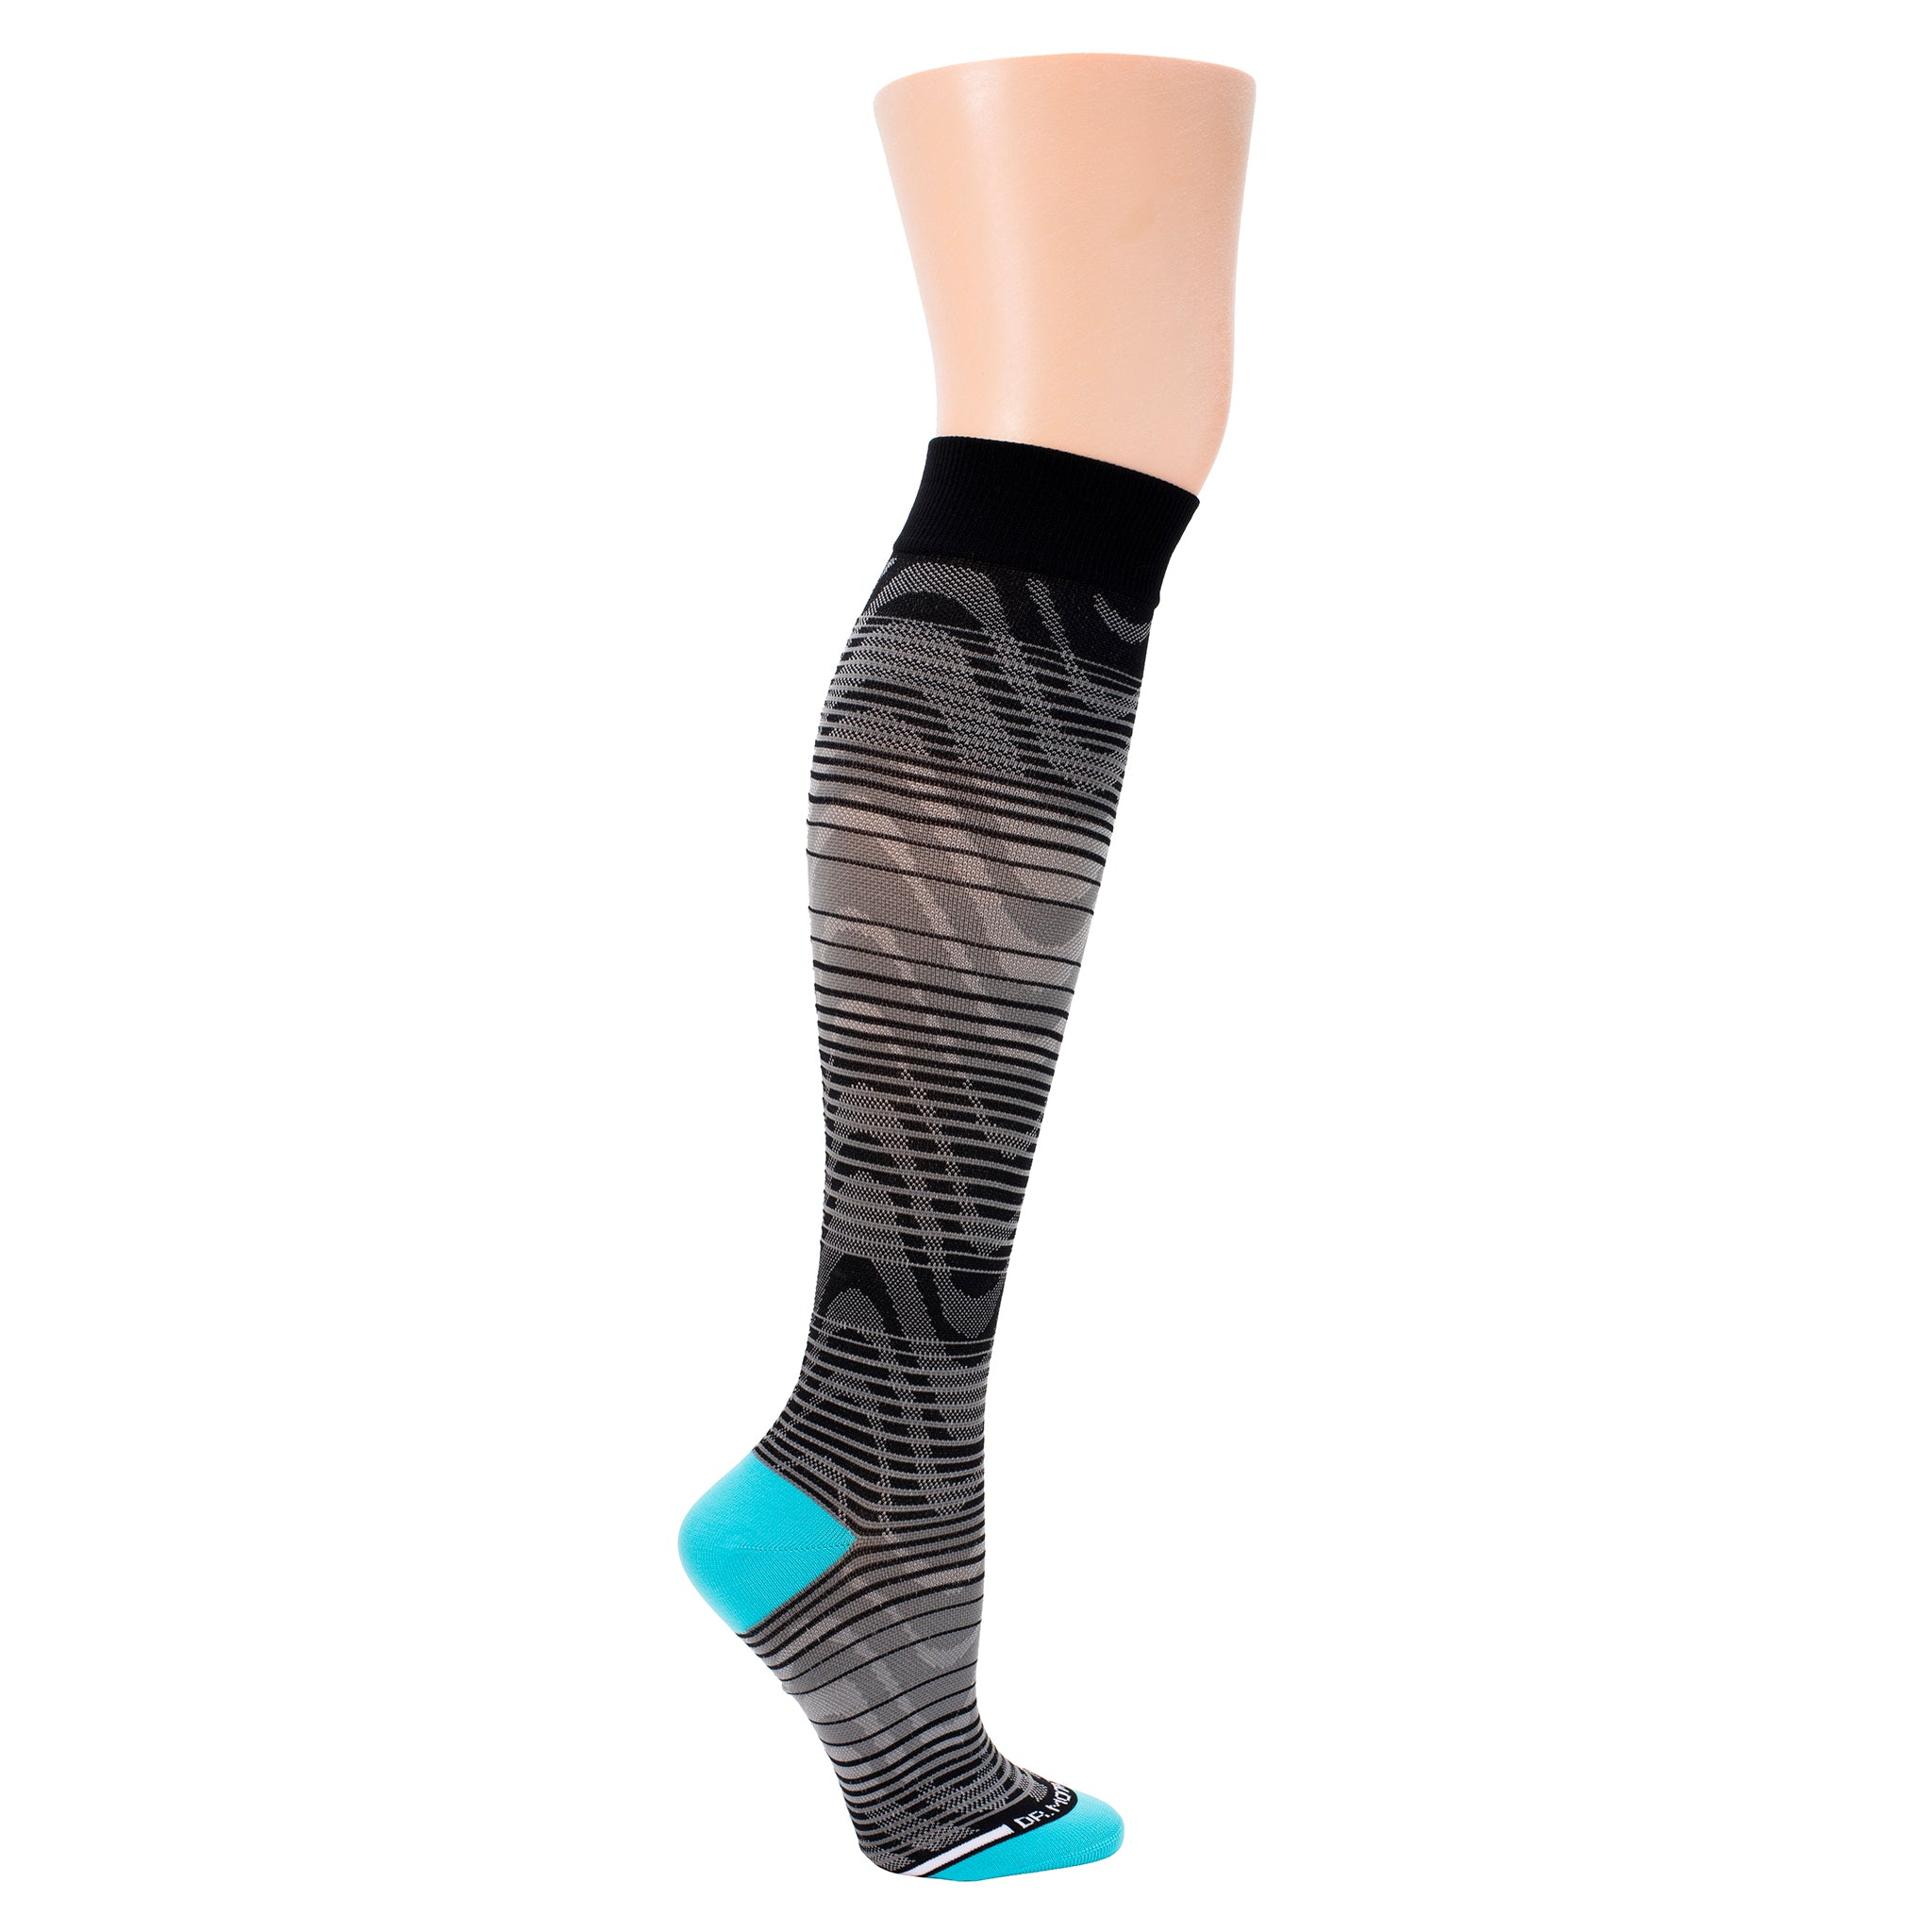 Deago Compression Socks Leg Warmers for Women & Men - Best for